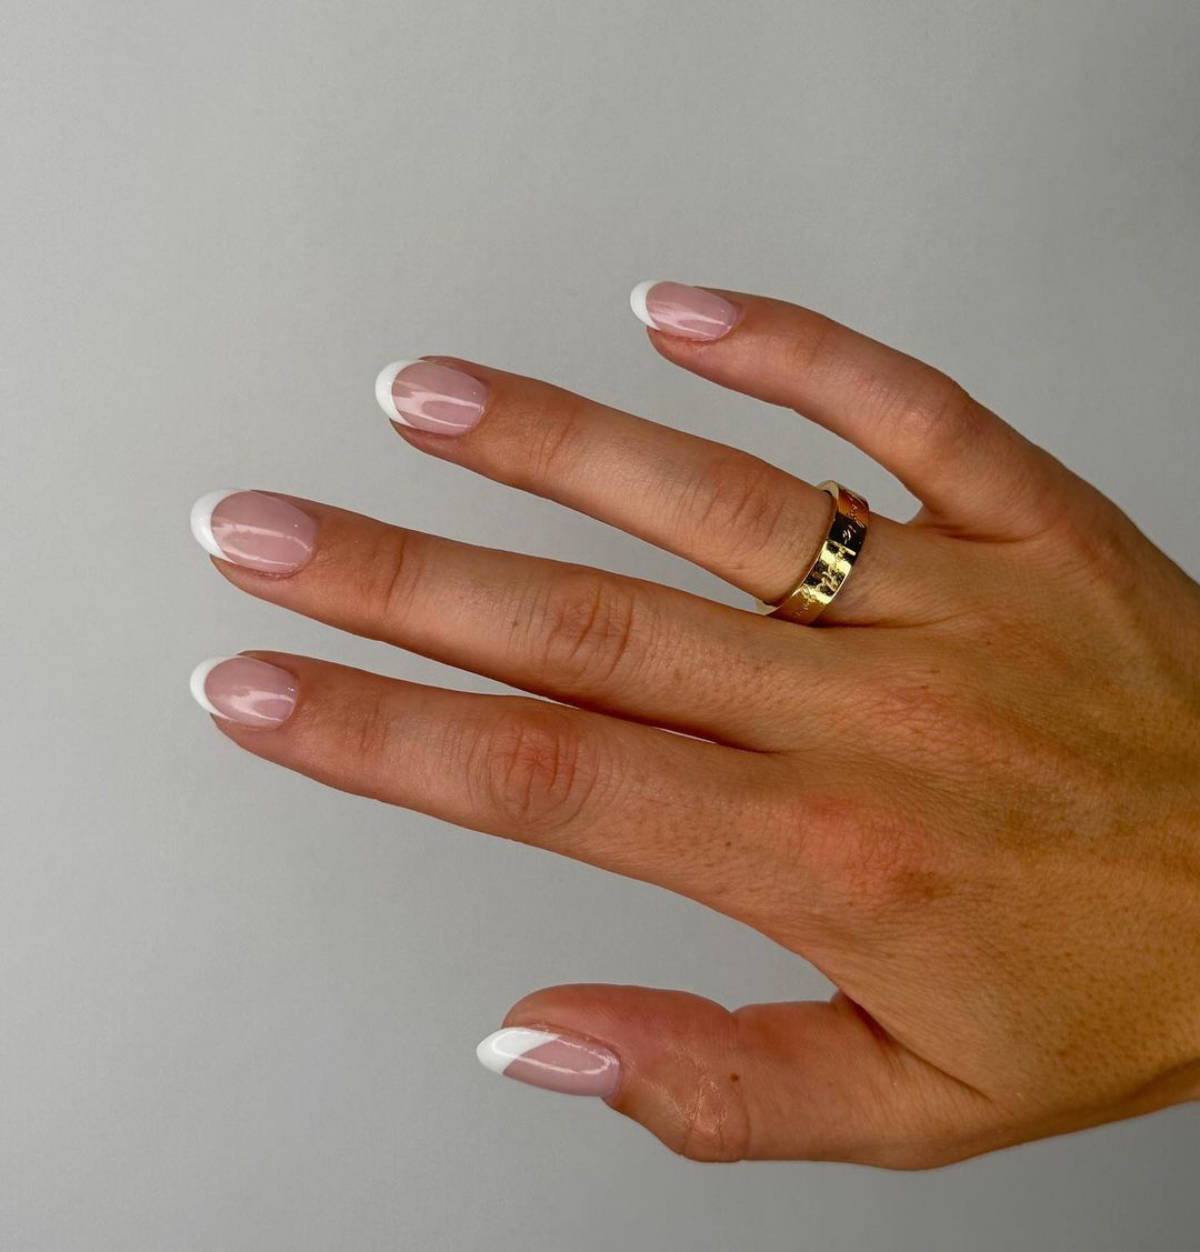 wedding nails white french tip